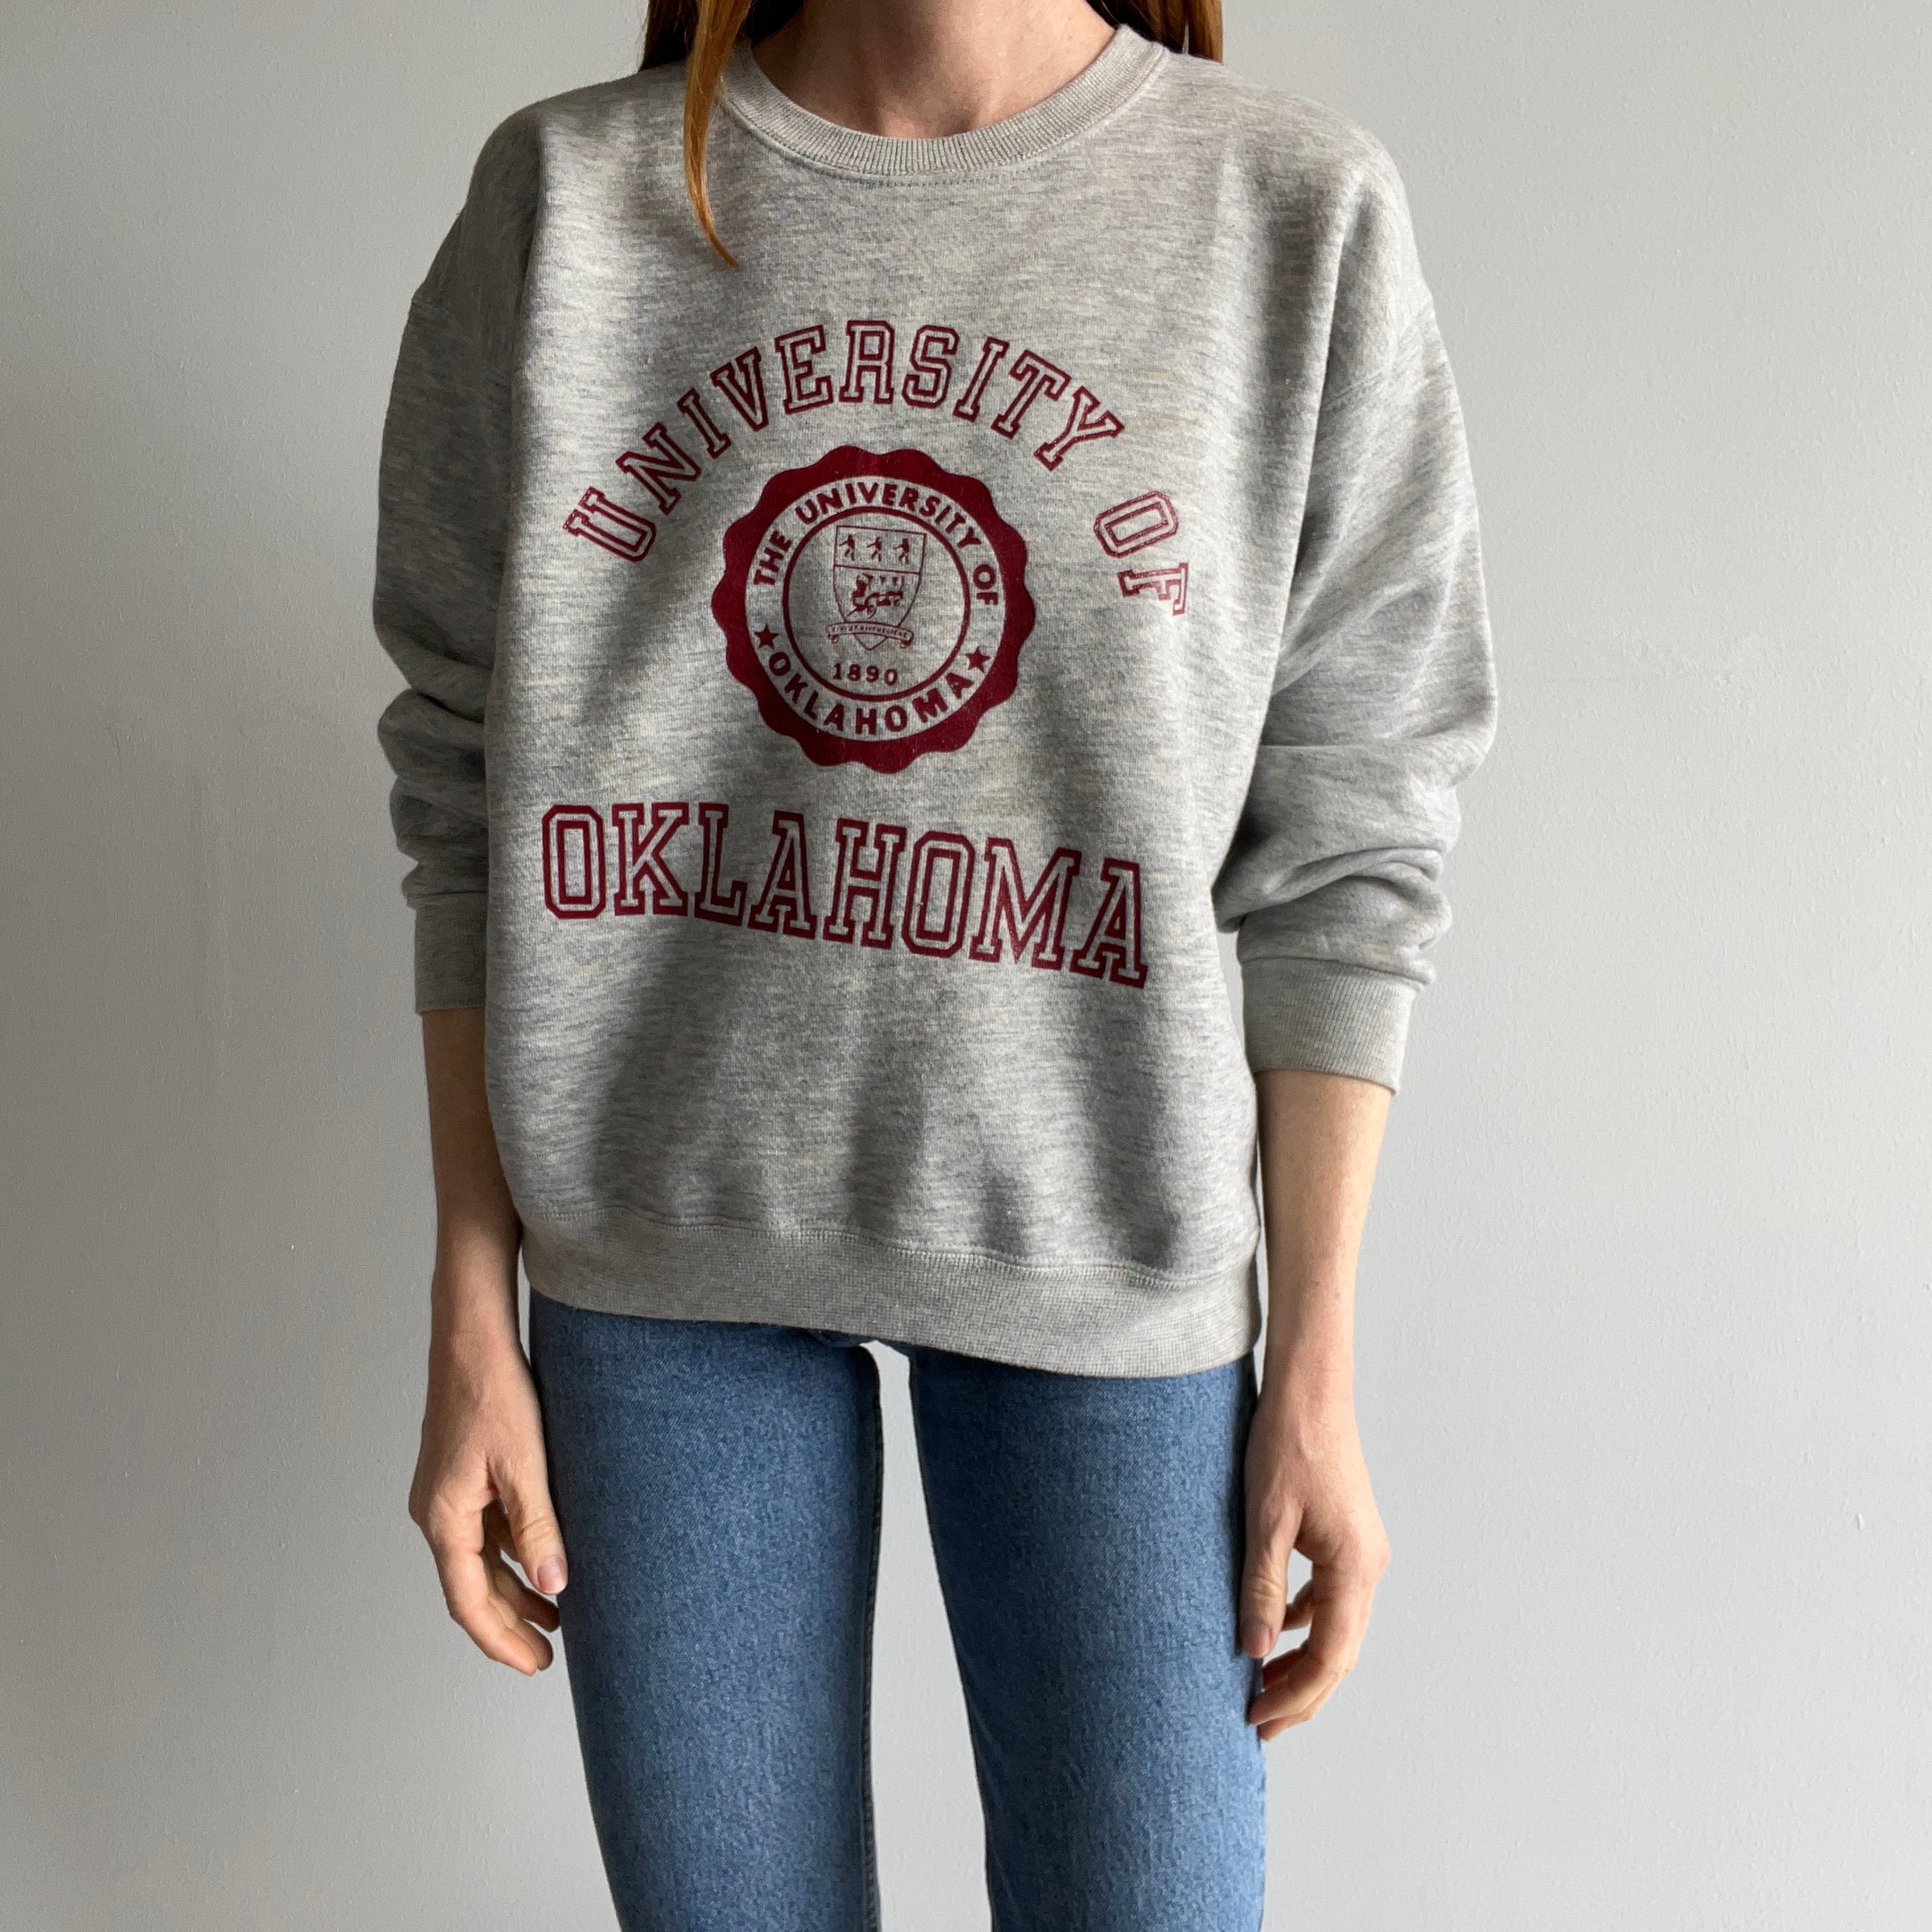 1980s University of Oklahoma Sweatshirt by Jansport (But Really Bassett Walker)